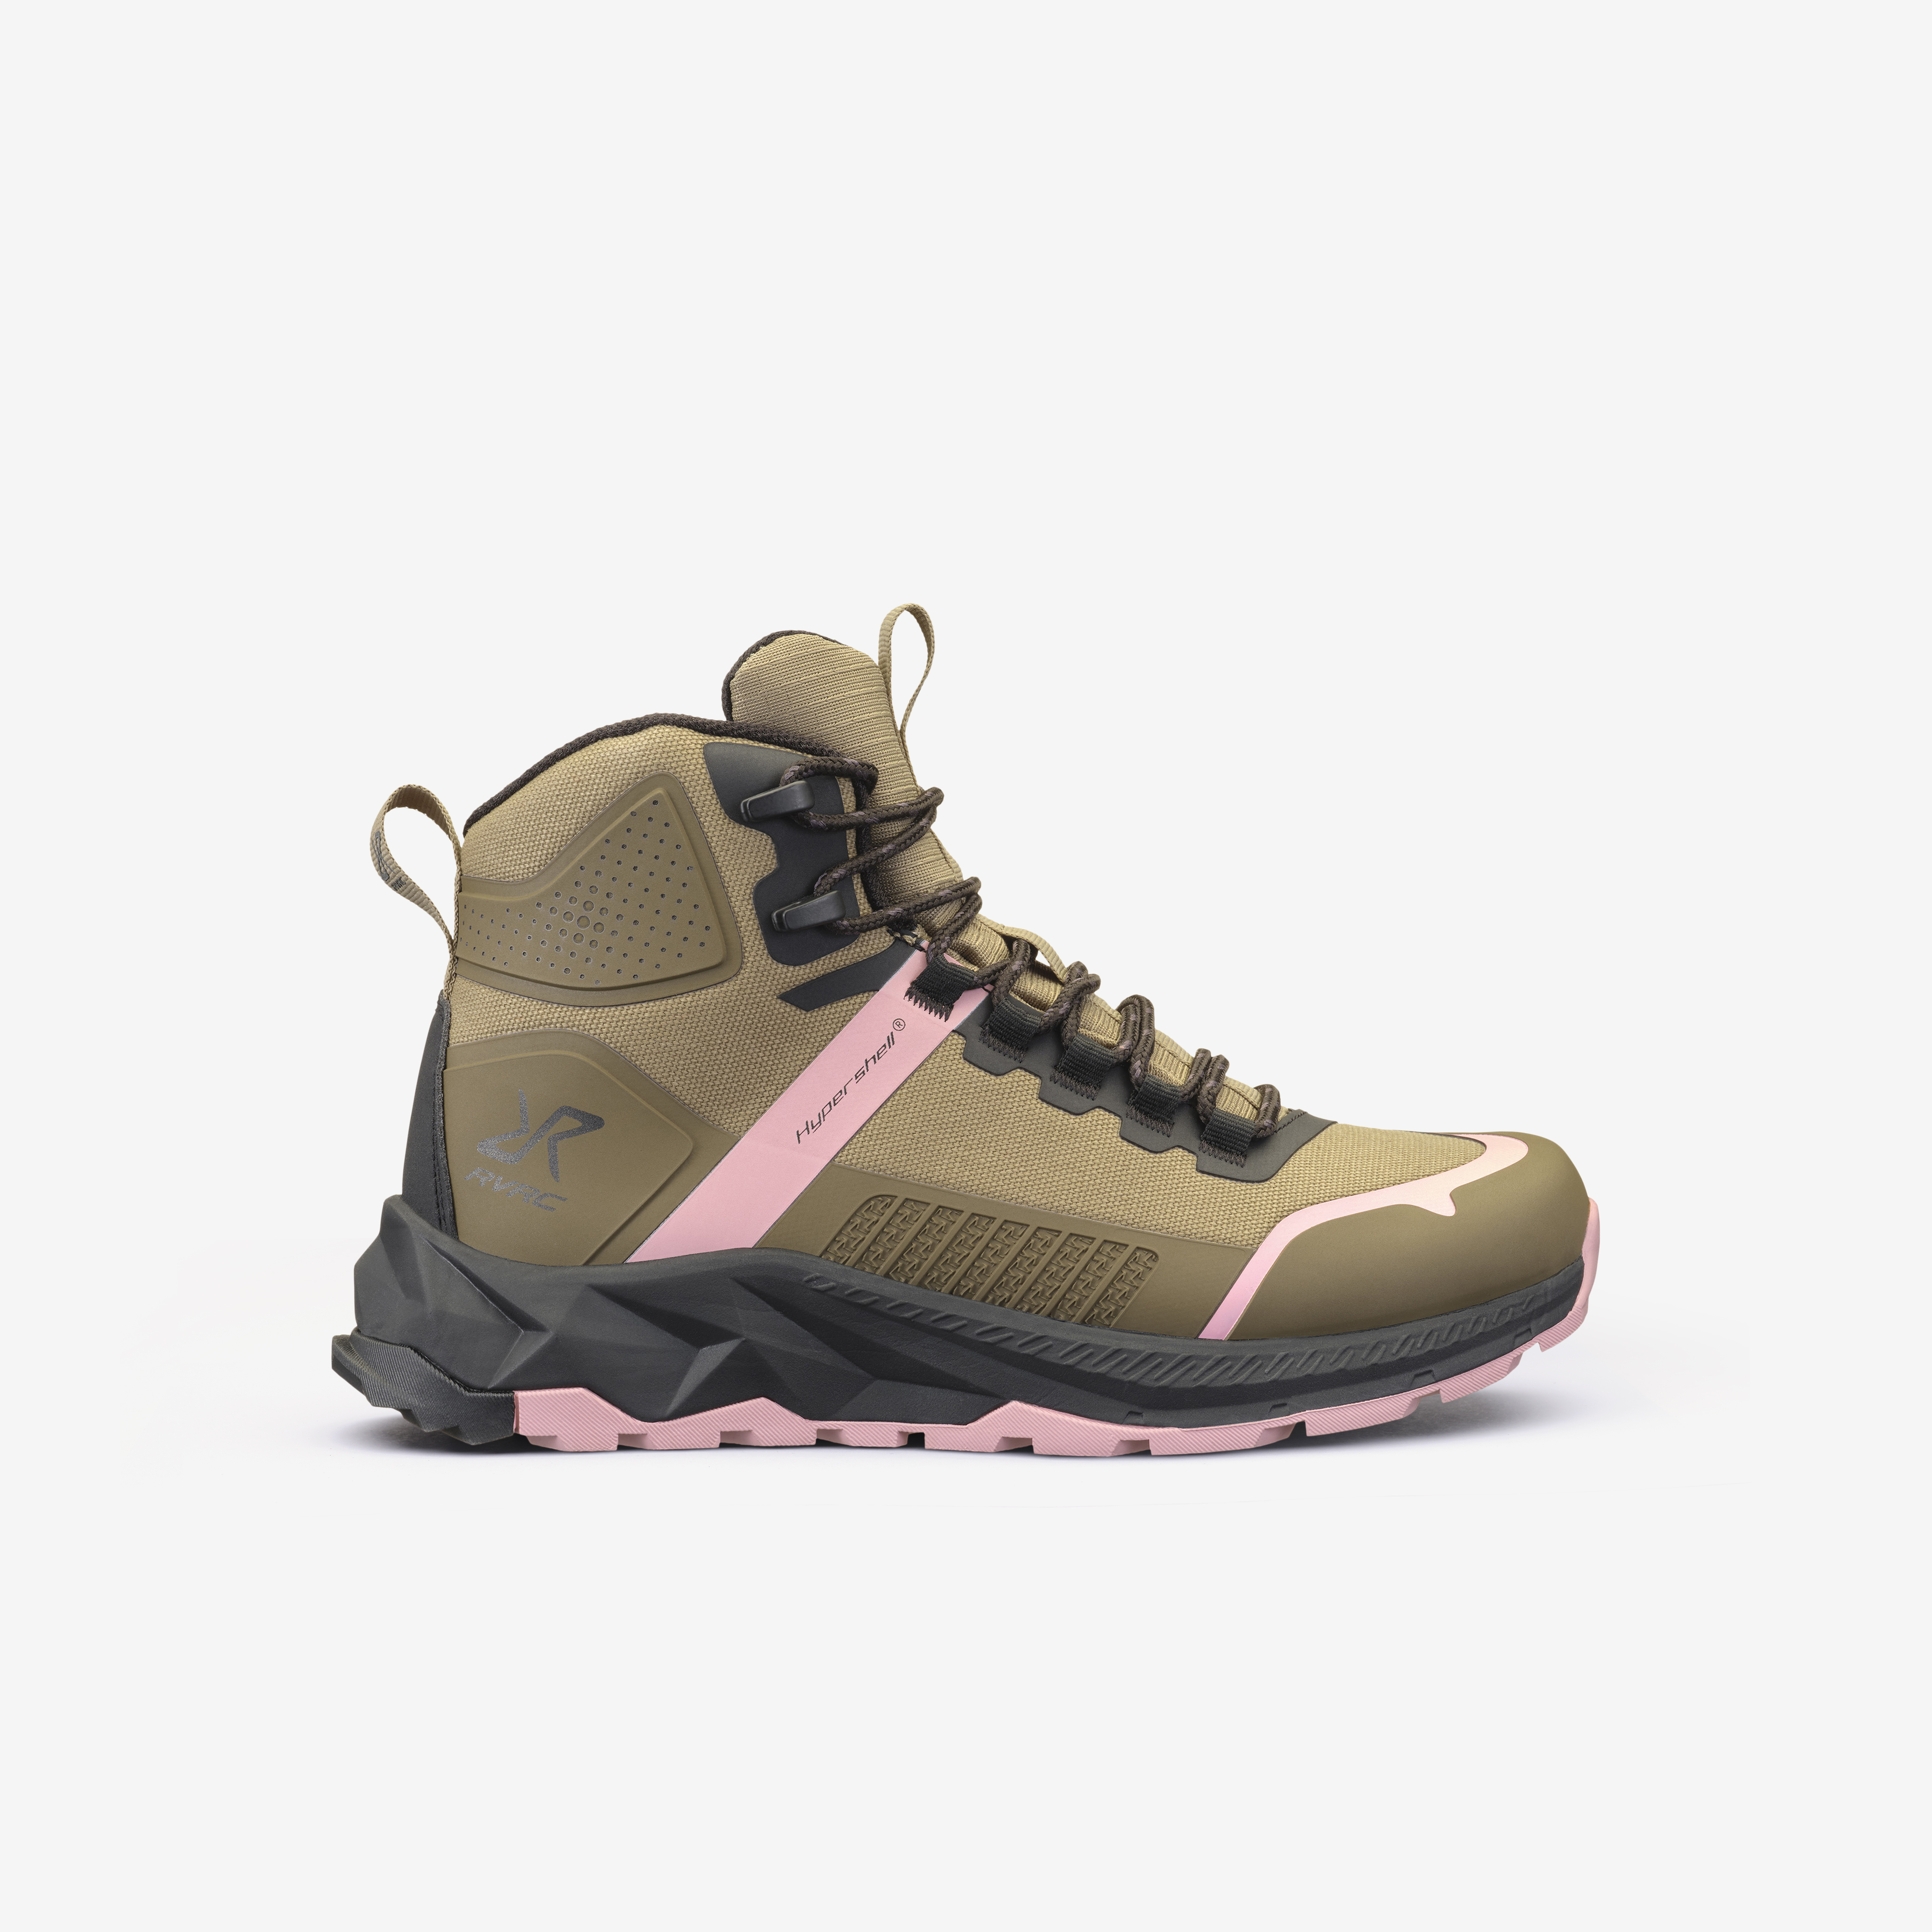 Phantom Trail Mid Waterproof Hiking Boots Khaki/Dusty Pink Naistele